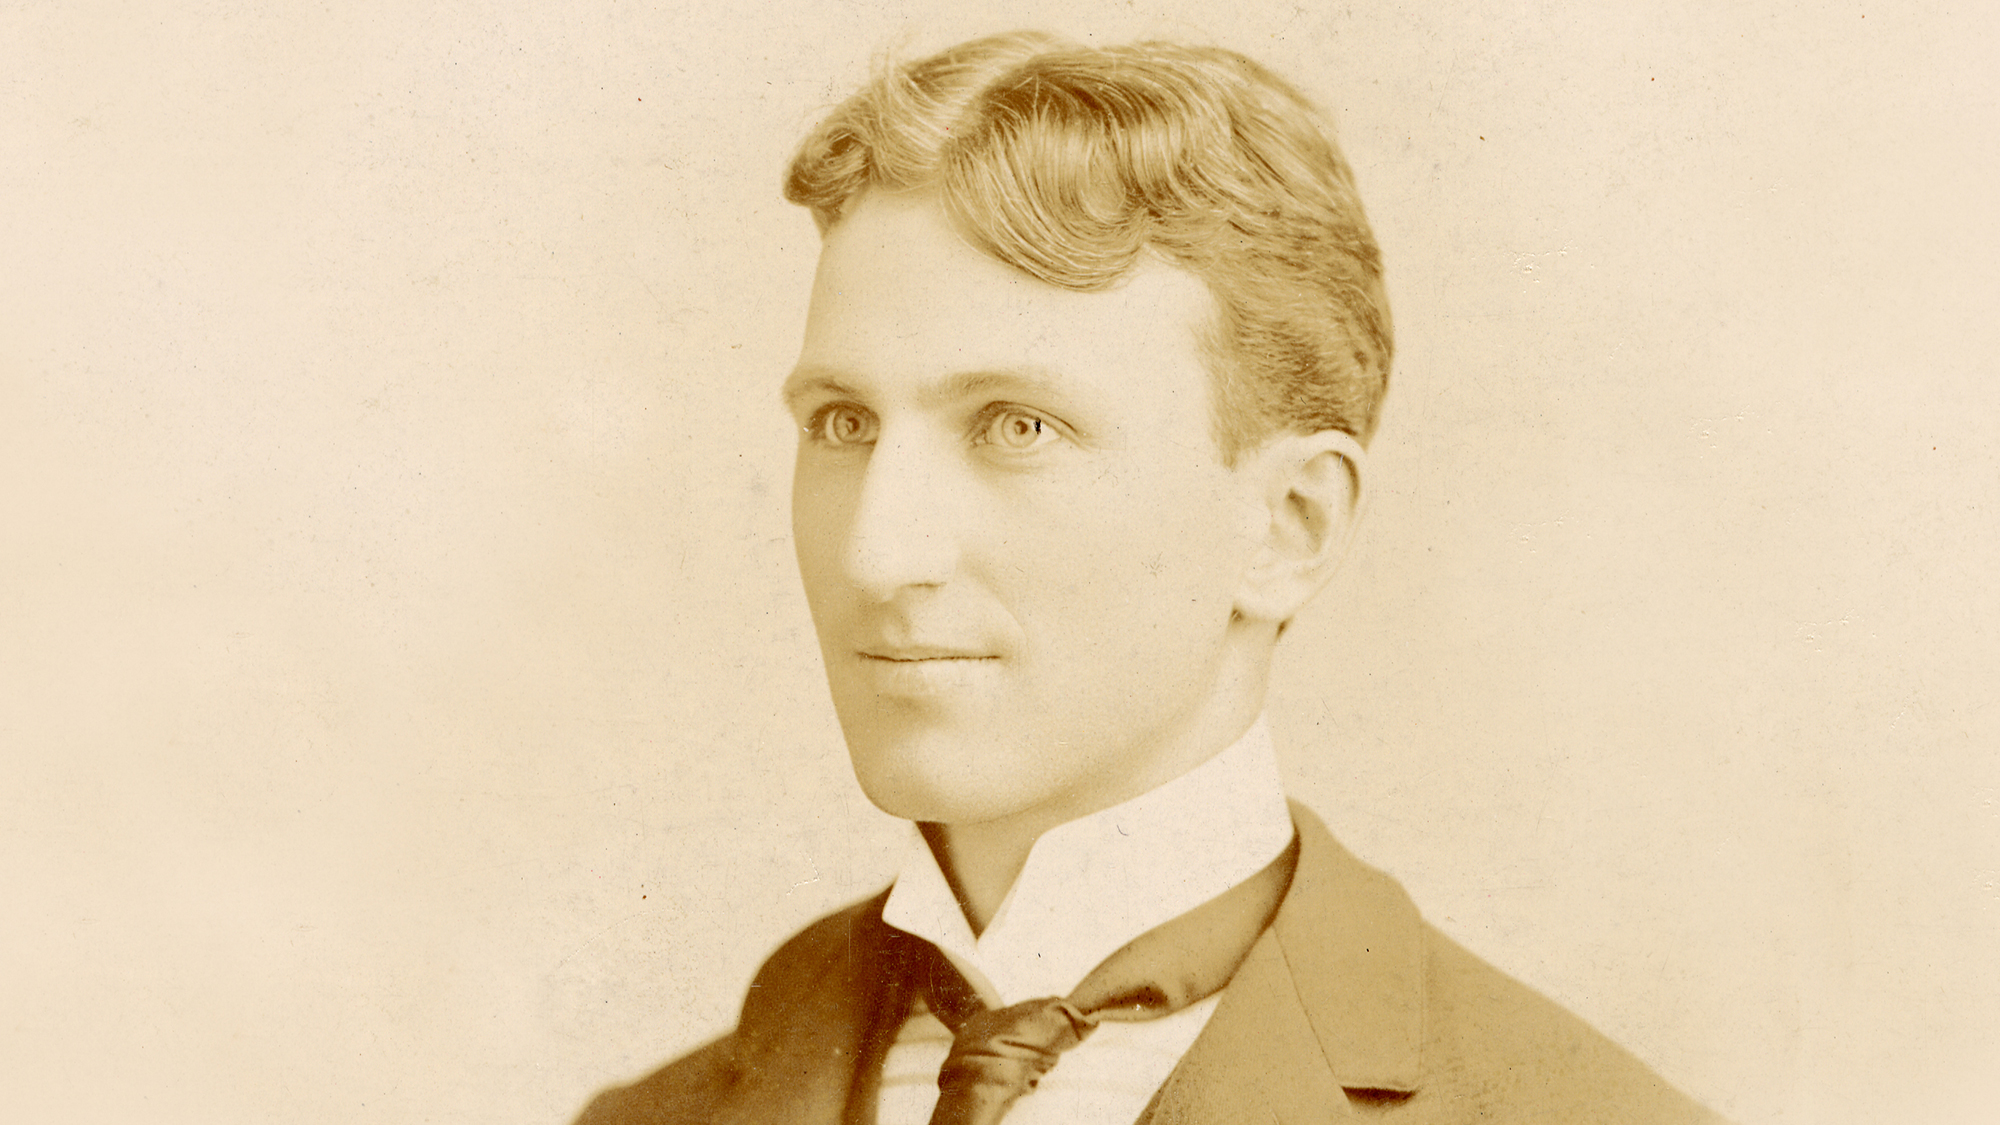 Herbert F. Johnson, Sr. joins the family company business in 1892